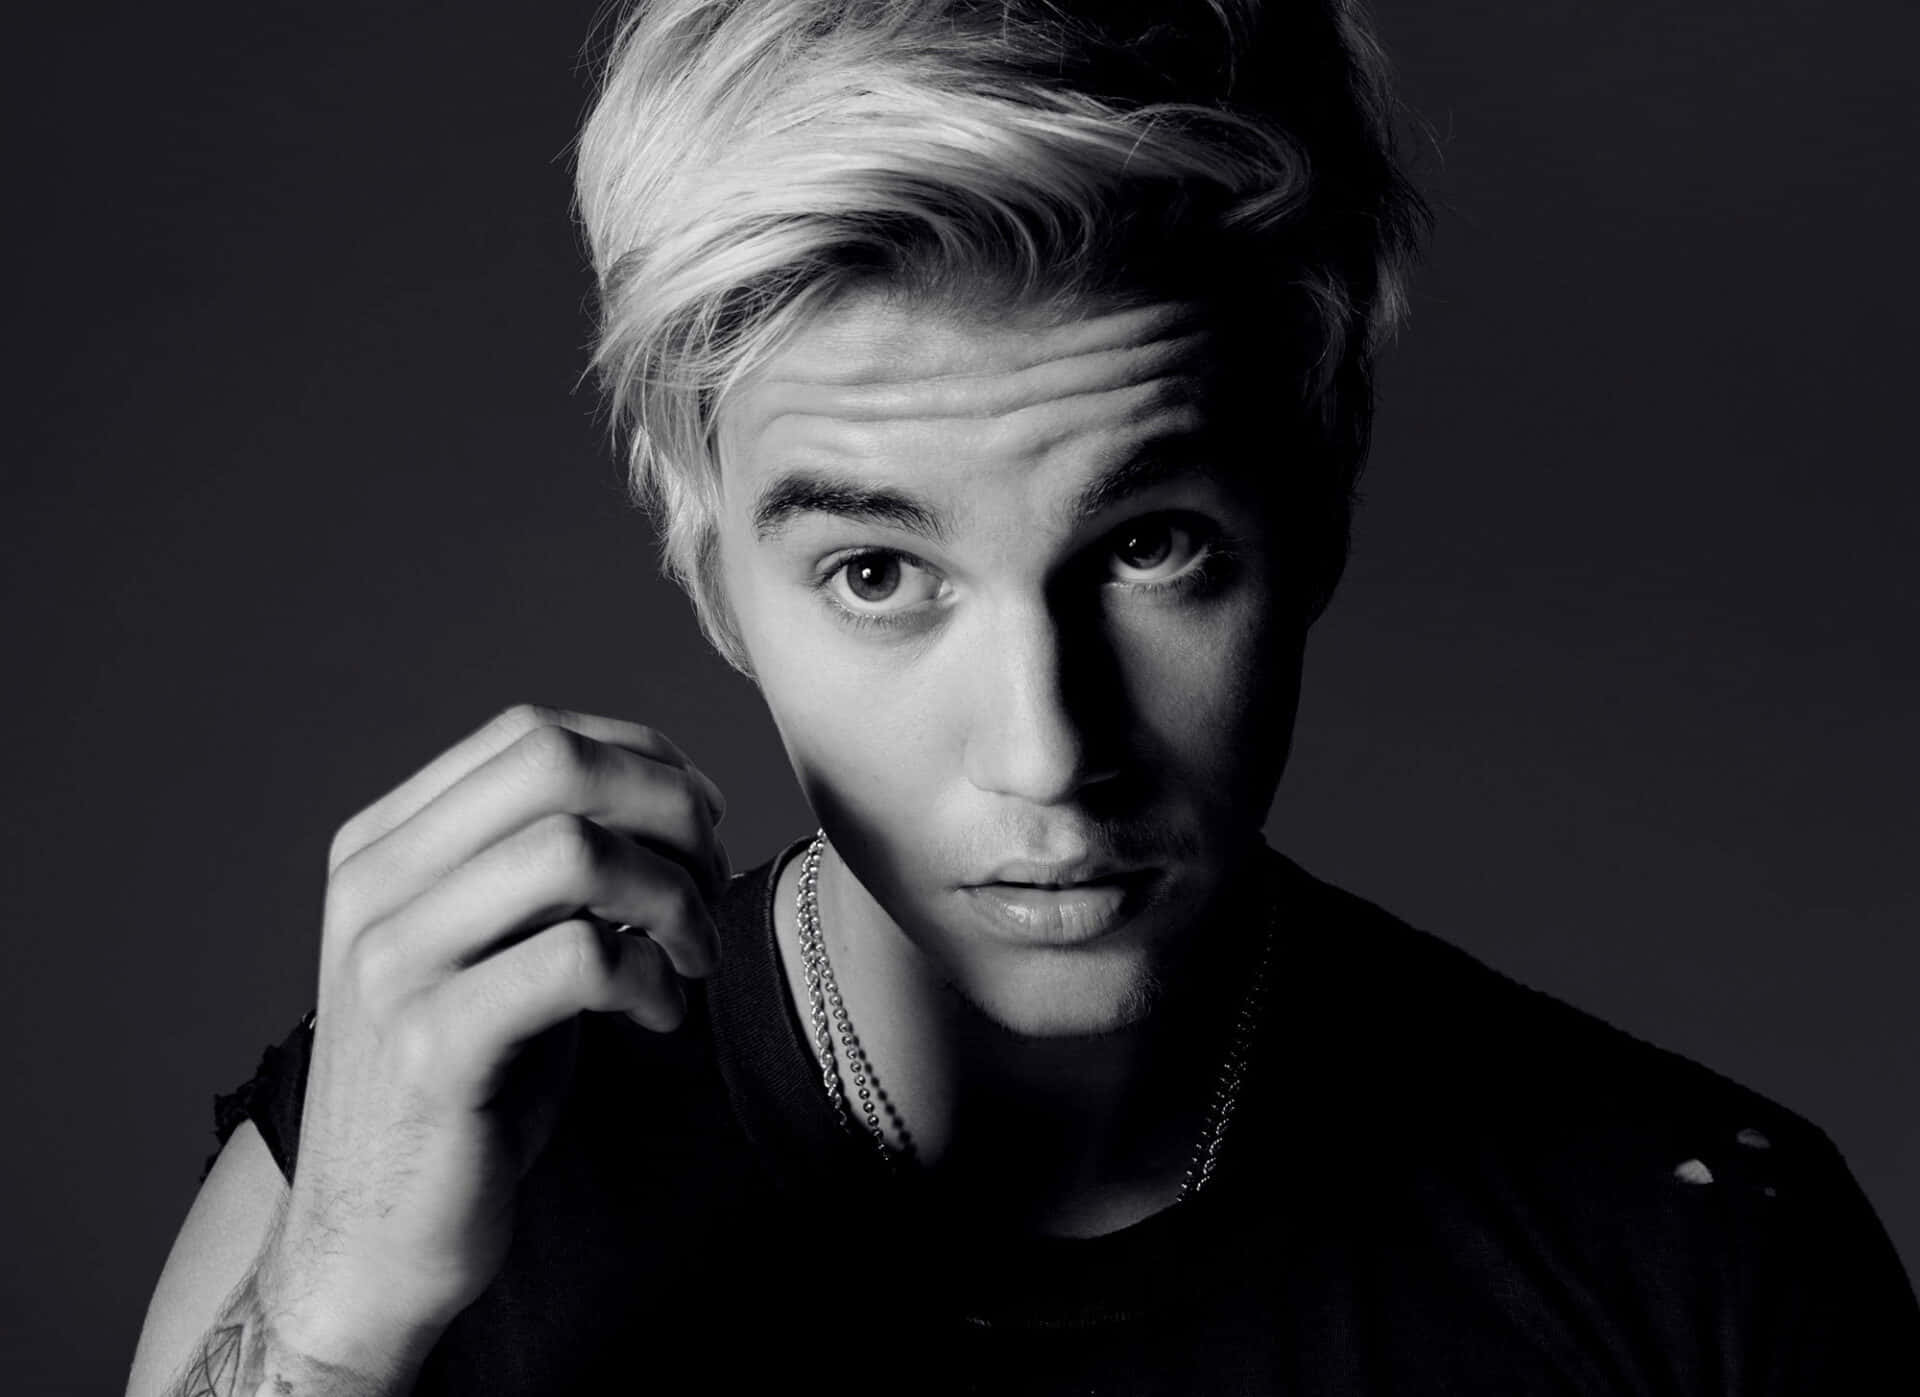 Image Justin Bieber 2015